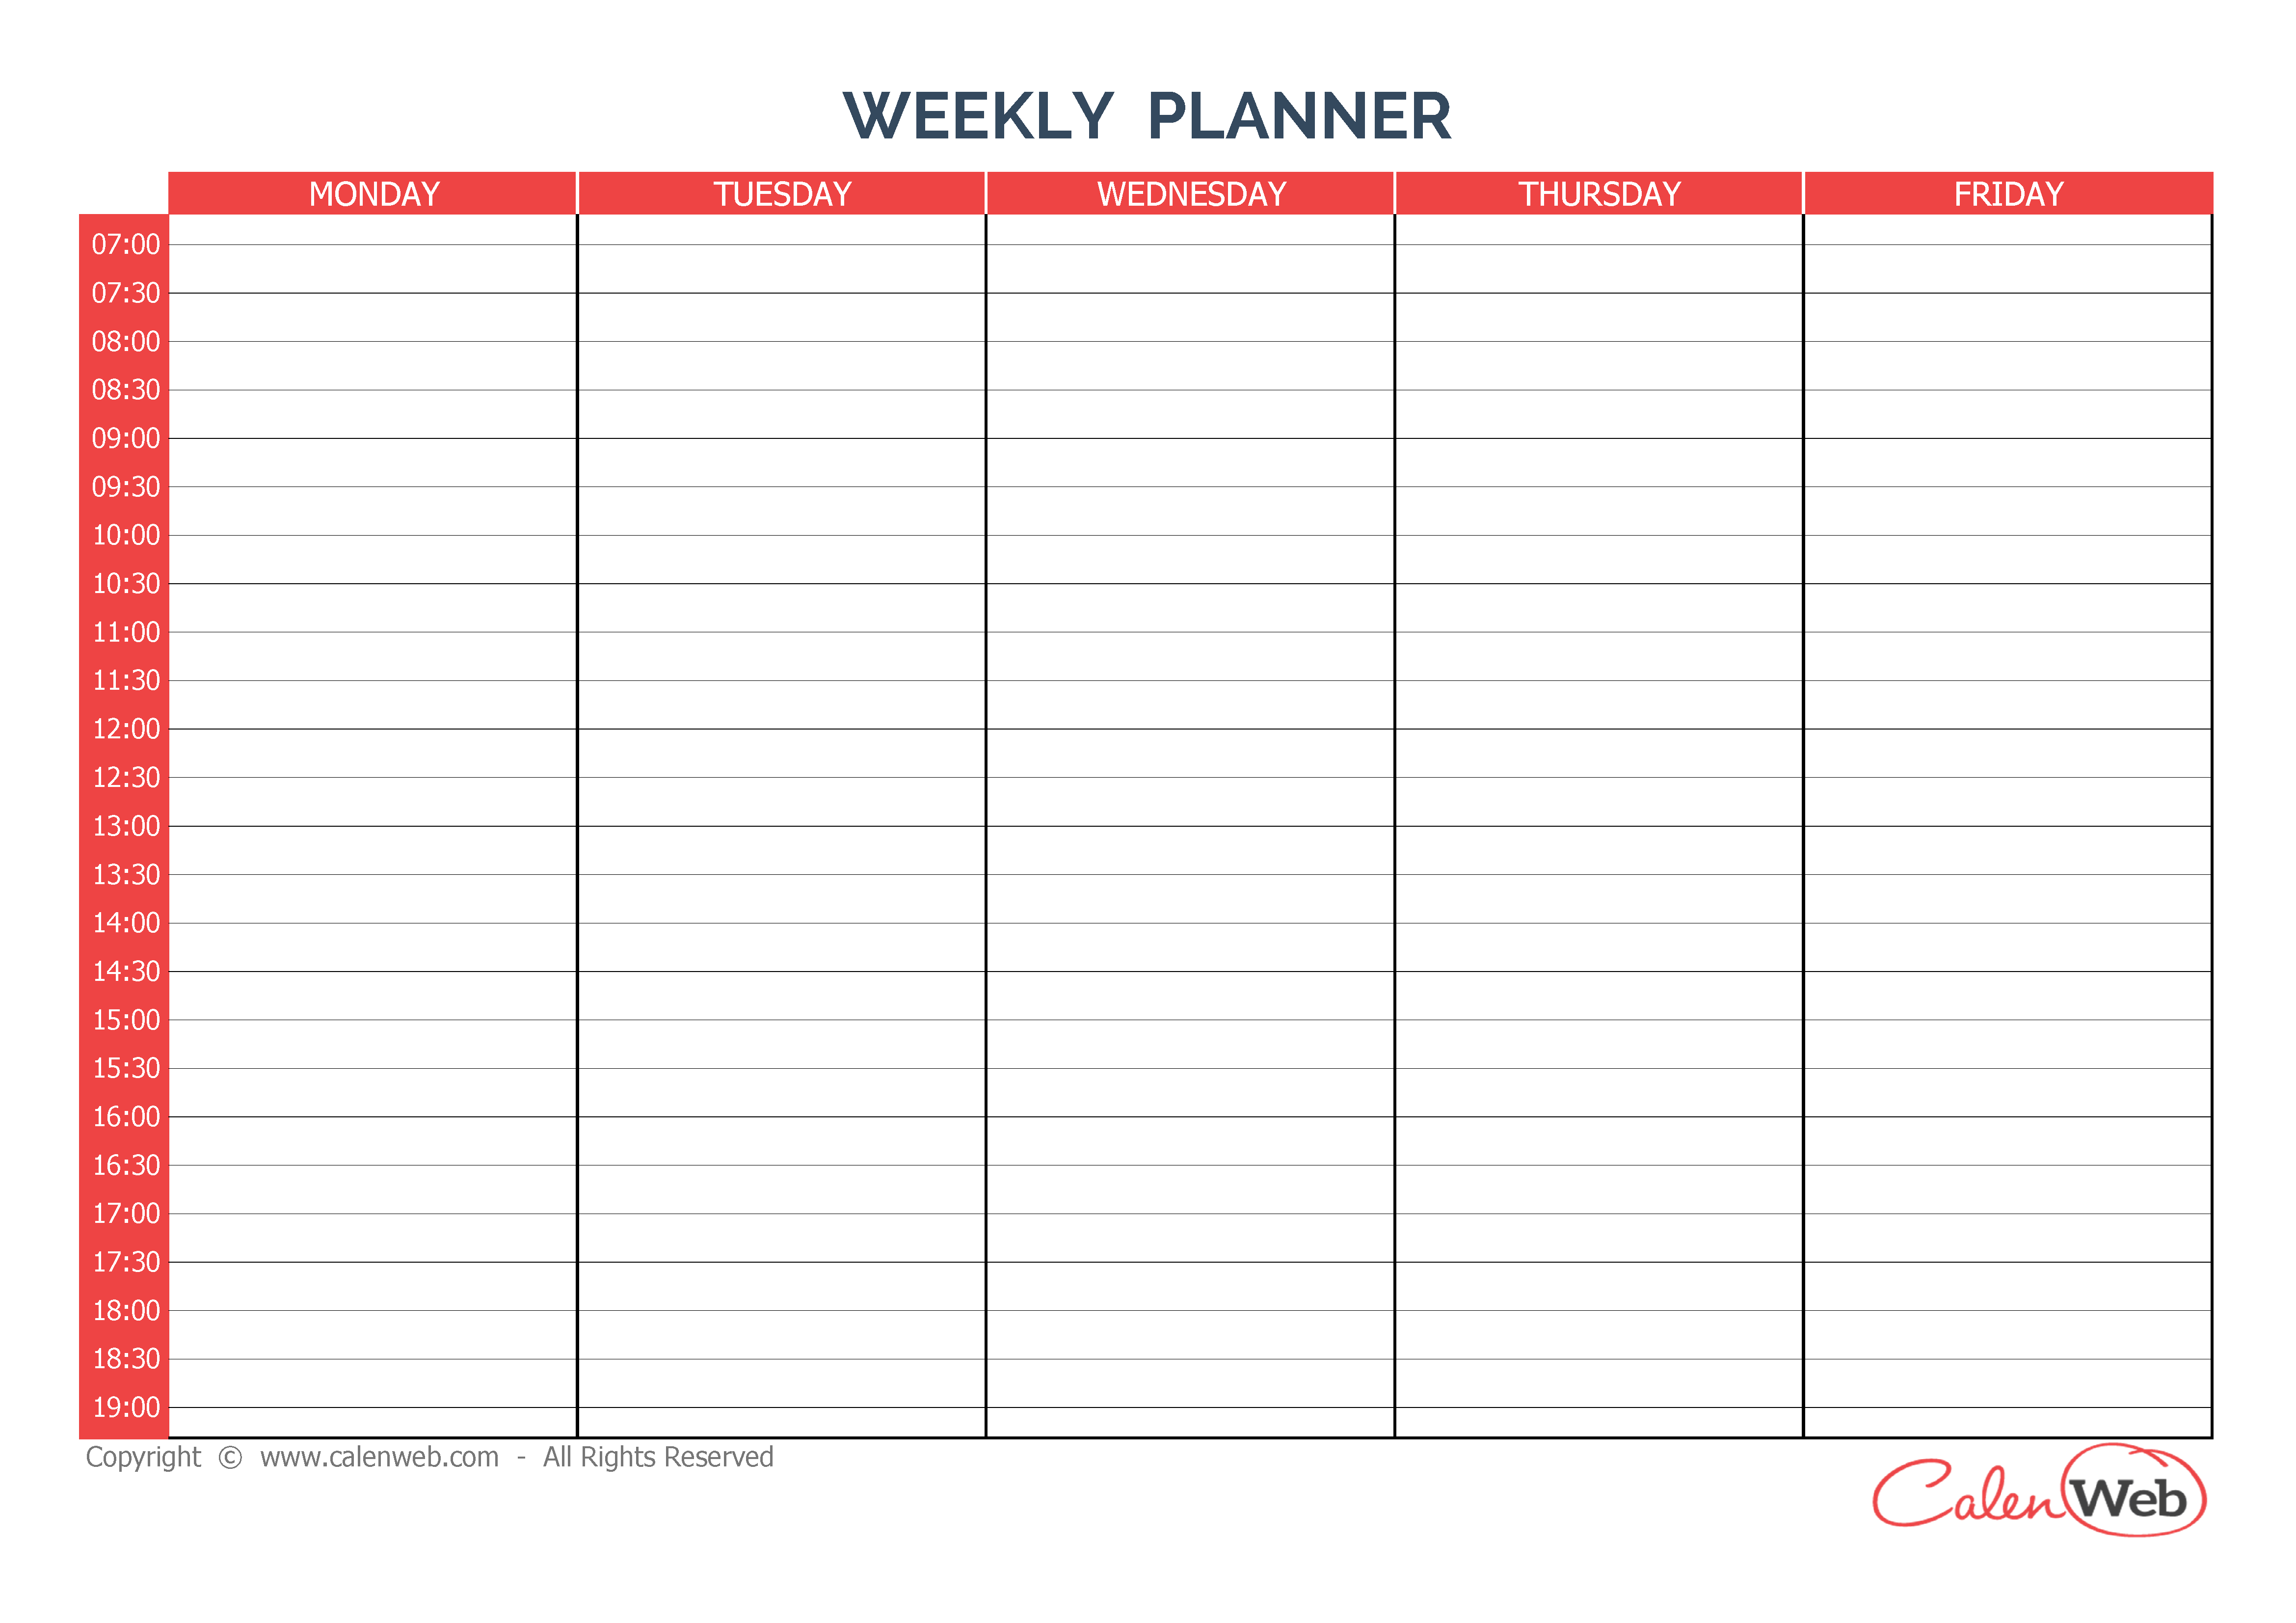 Weekly Planner 5 Days A Week Of 5 Days  Calenweb regarding 5 Day Calendar Printable